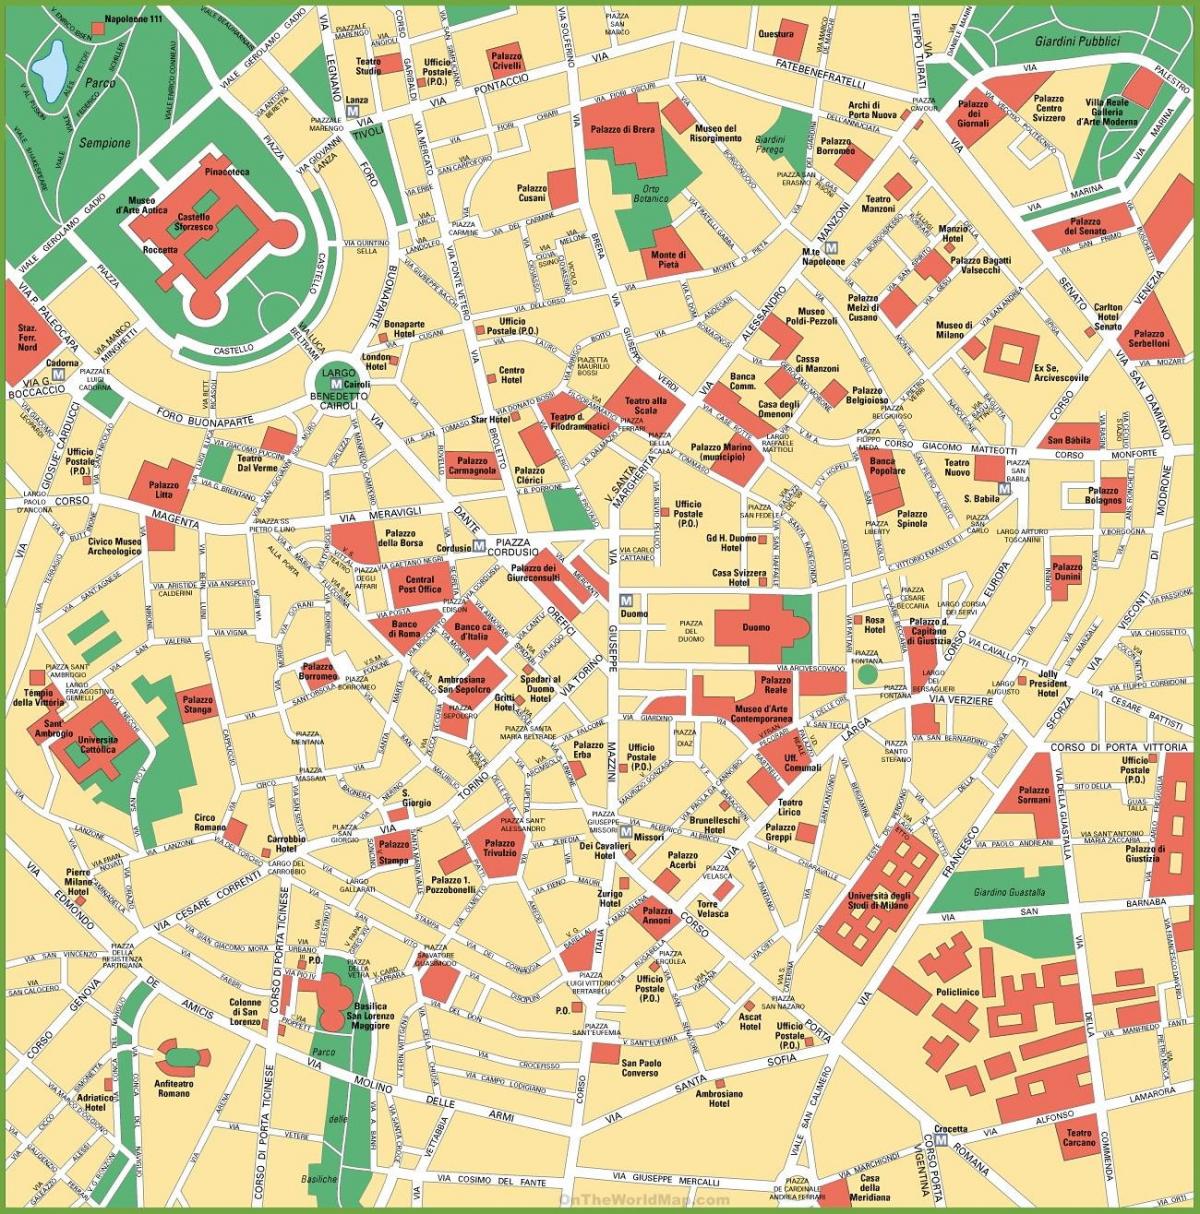 milano city center mapě